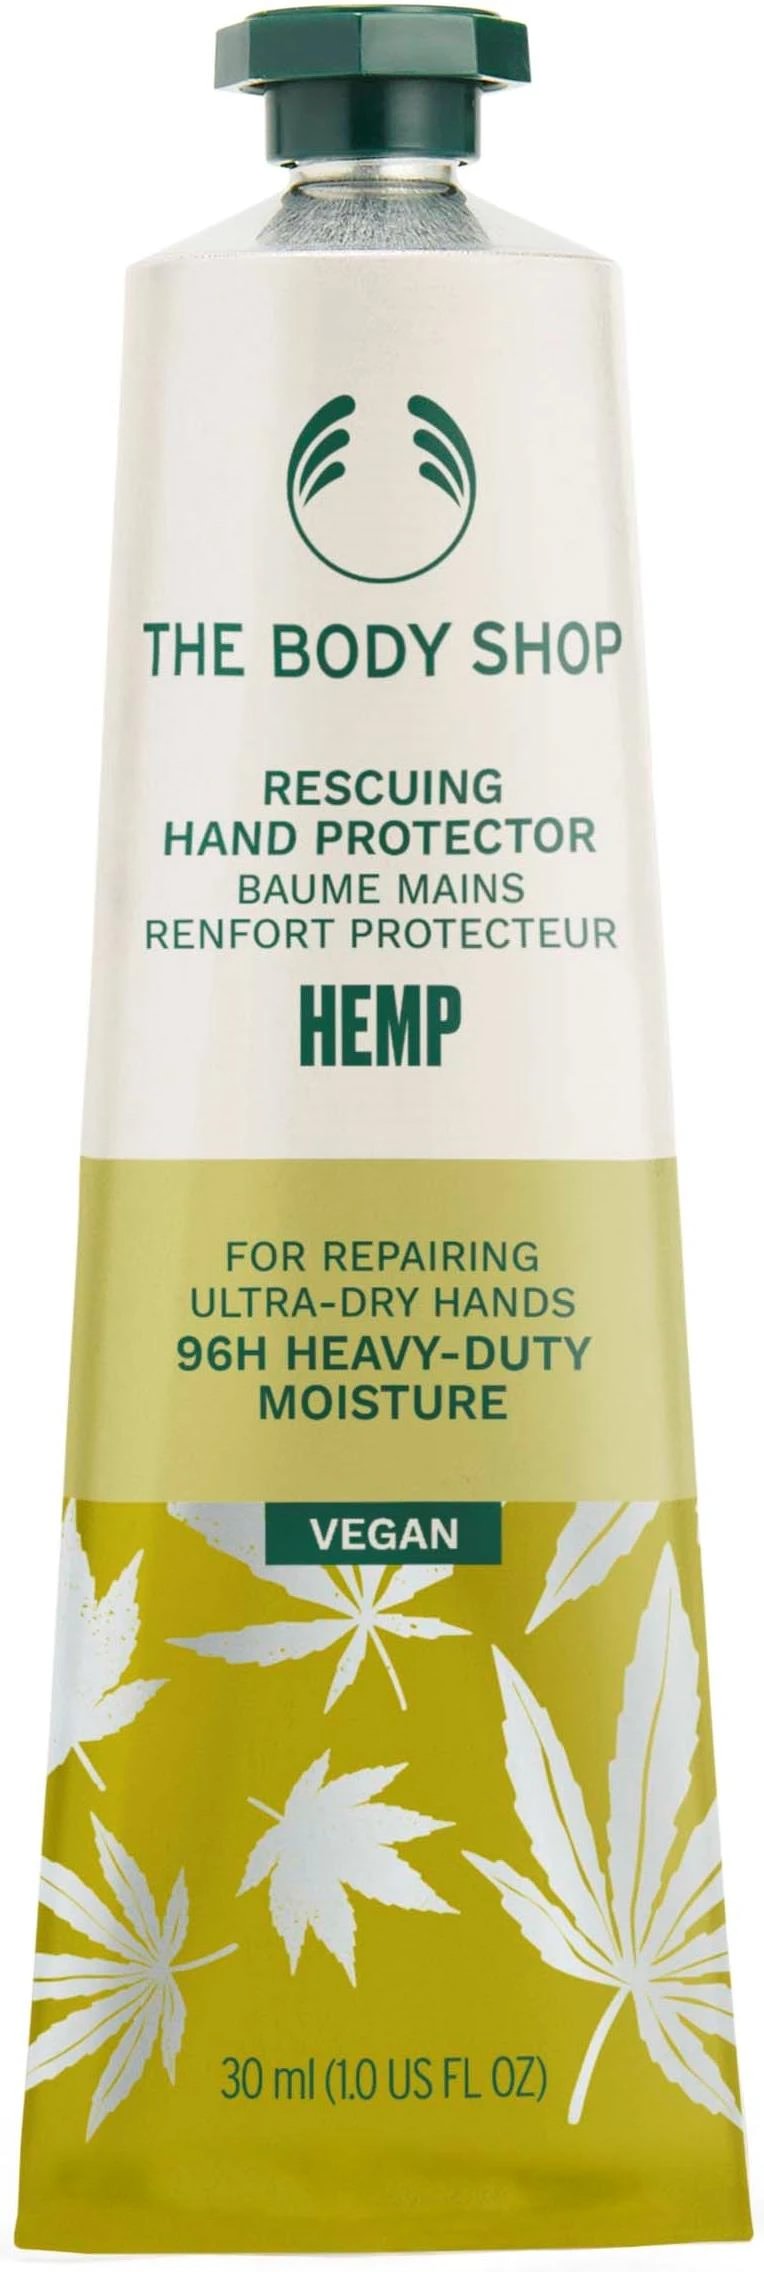 The Body Shop hemp hand protection 30ml